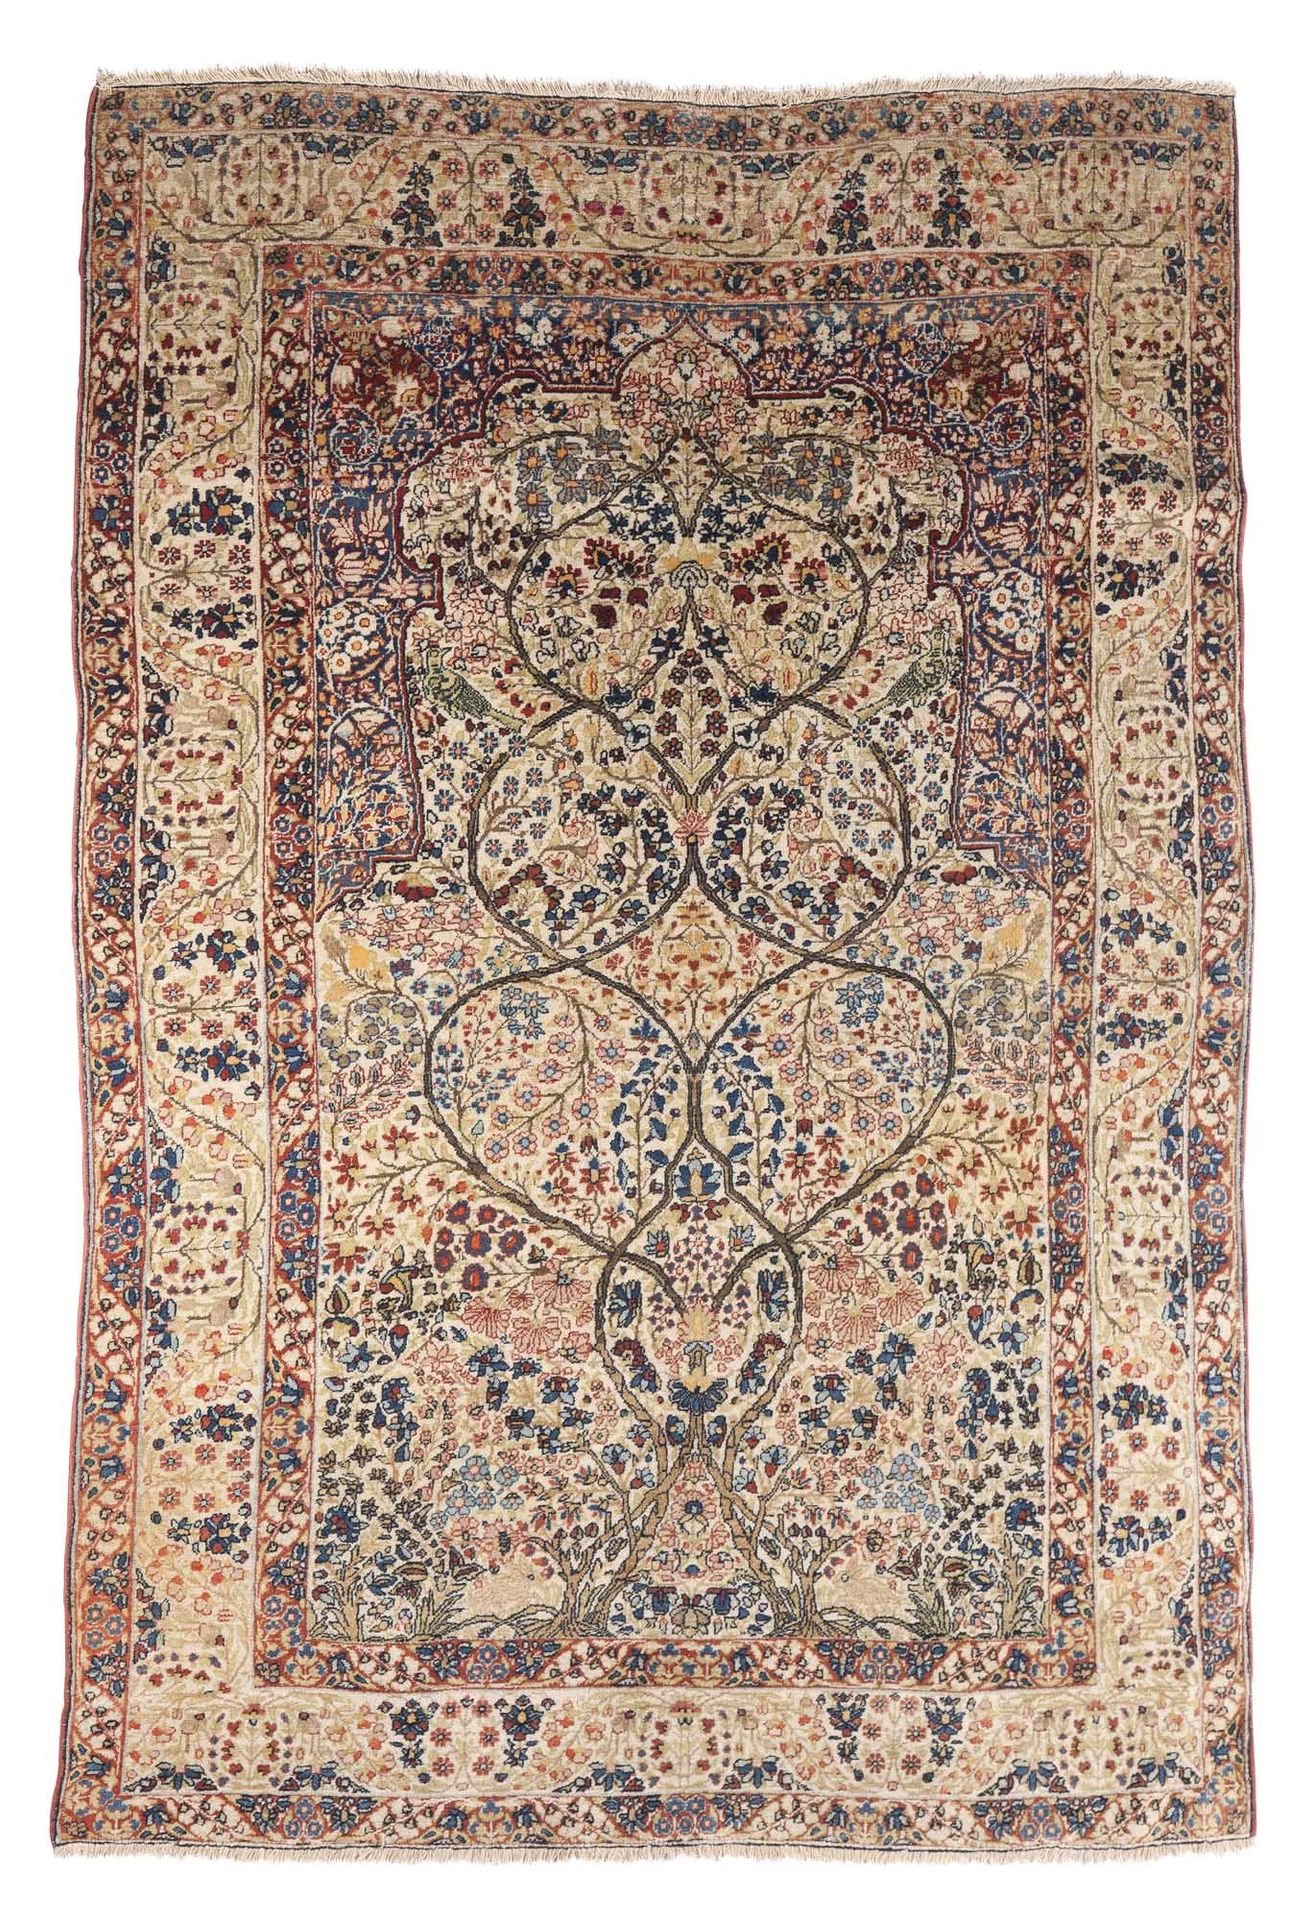 Null 基尔曼地毯（波斯）19世纪末

尺寸：206 x 134厘米

技术特点 : 羊毛丝绒，棉质基础。

一片象牙地让我们瞥见了通往伊甸园的大门。一棵象征&hellip;